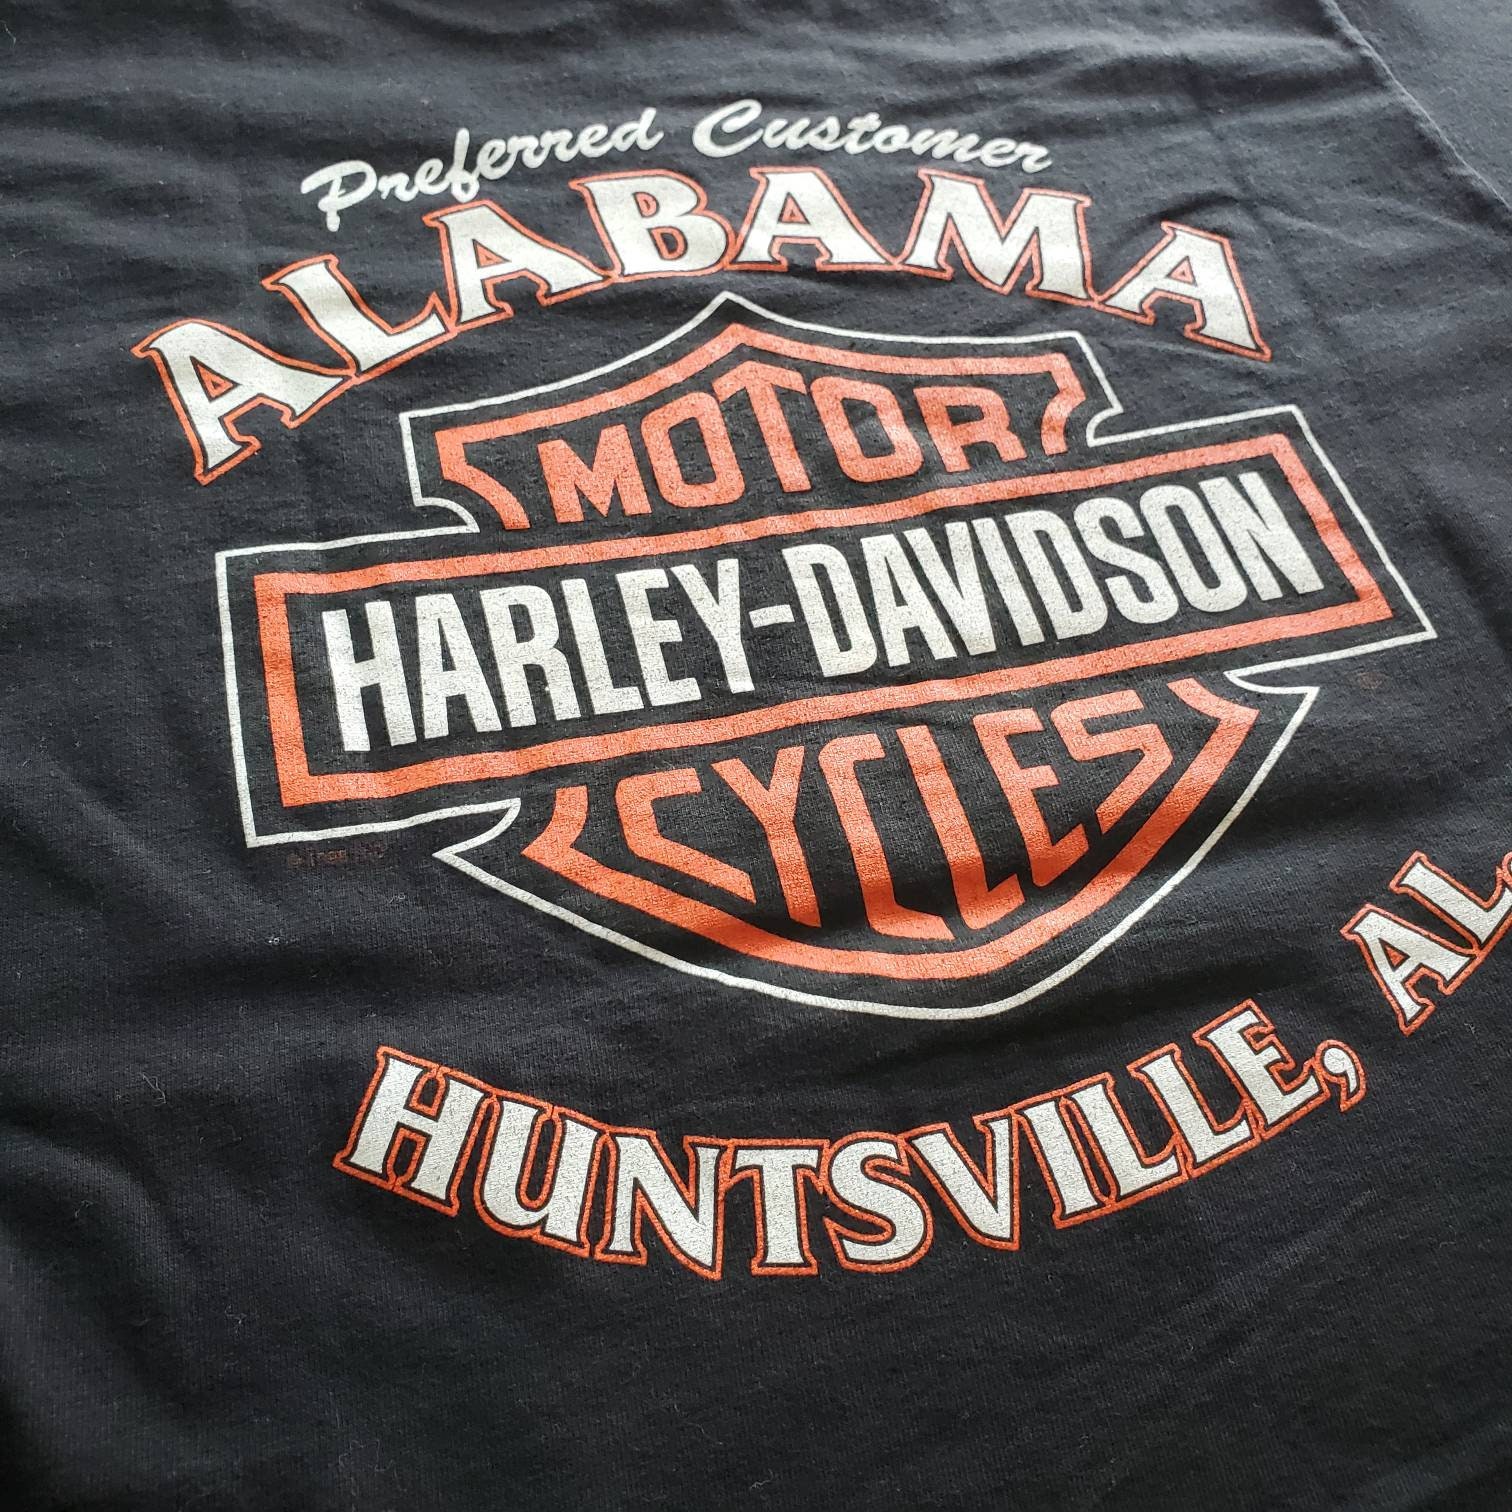 Vintage Harley Davidson T Shirt Etsy